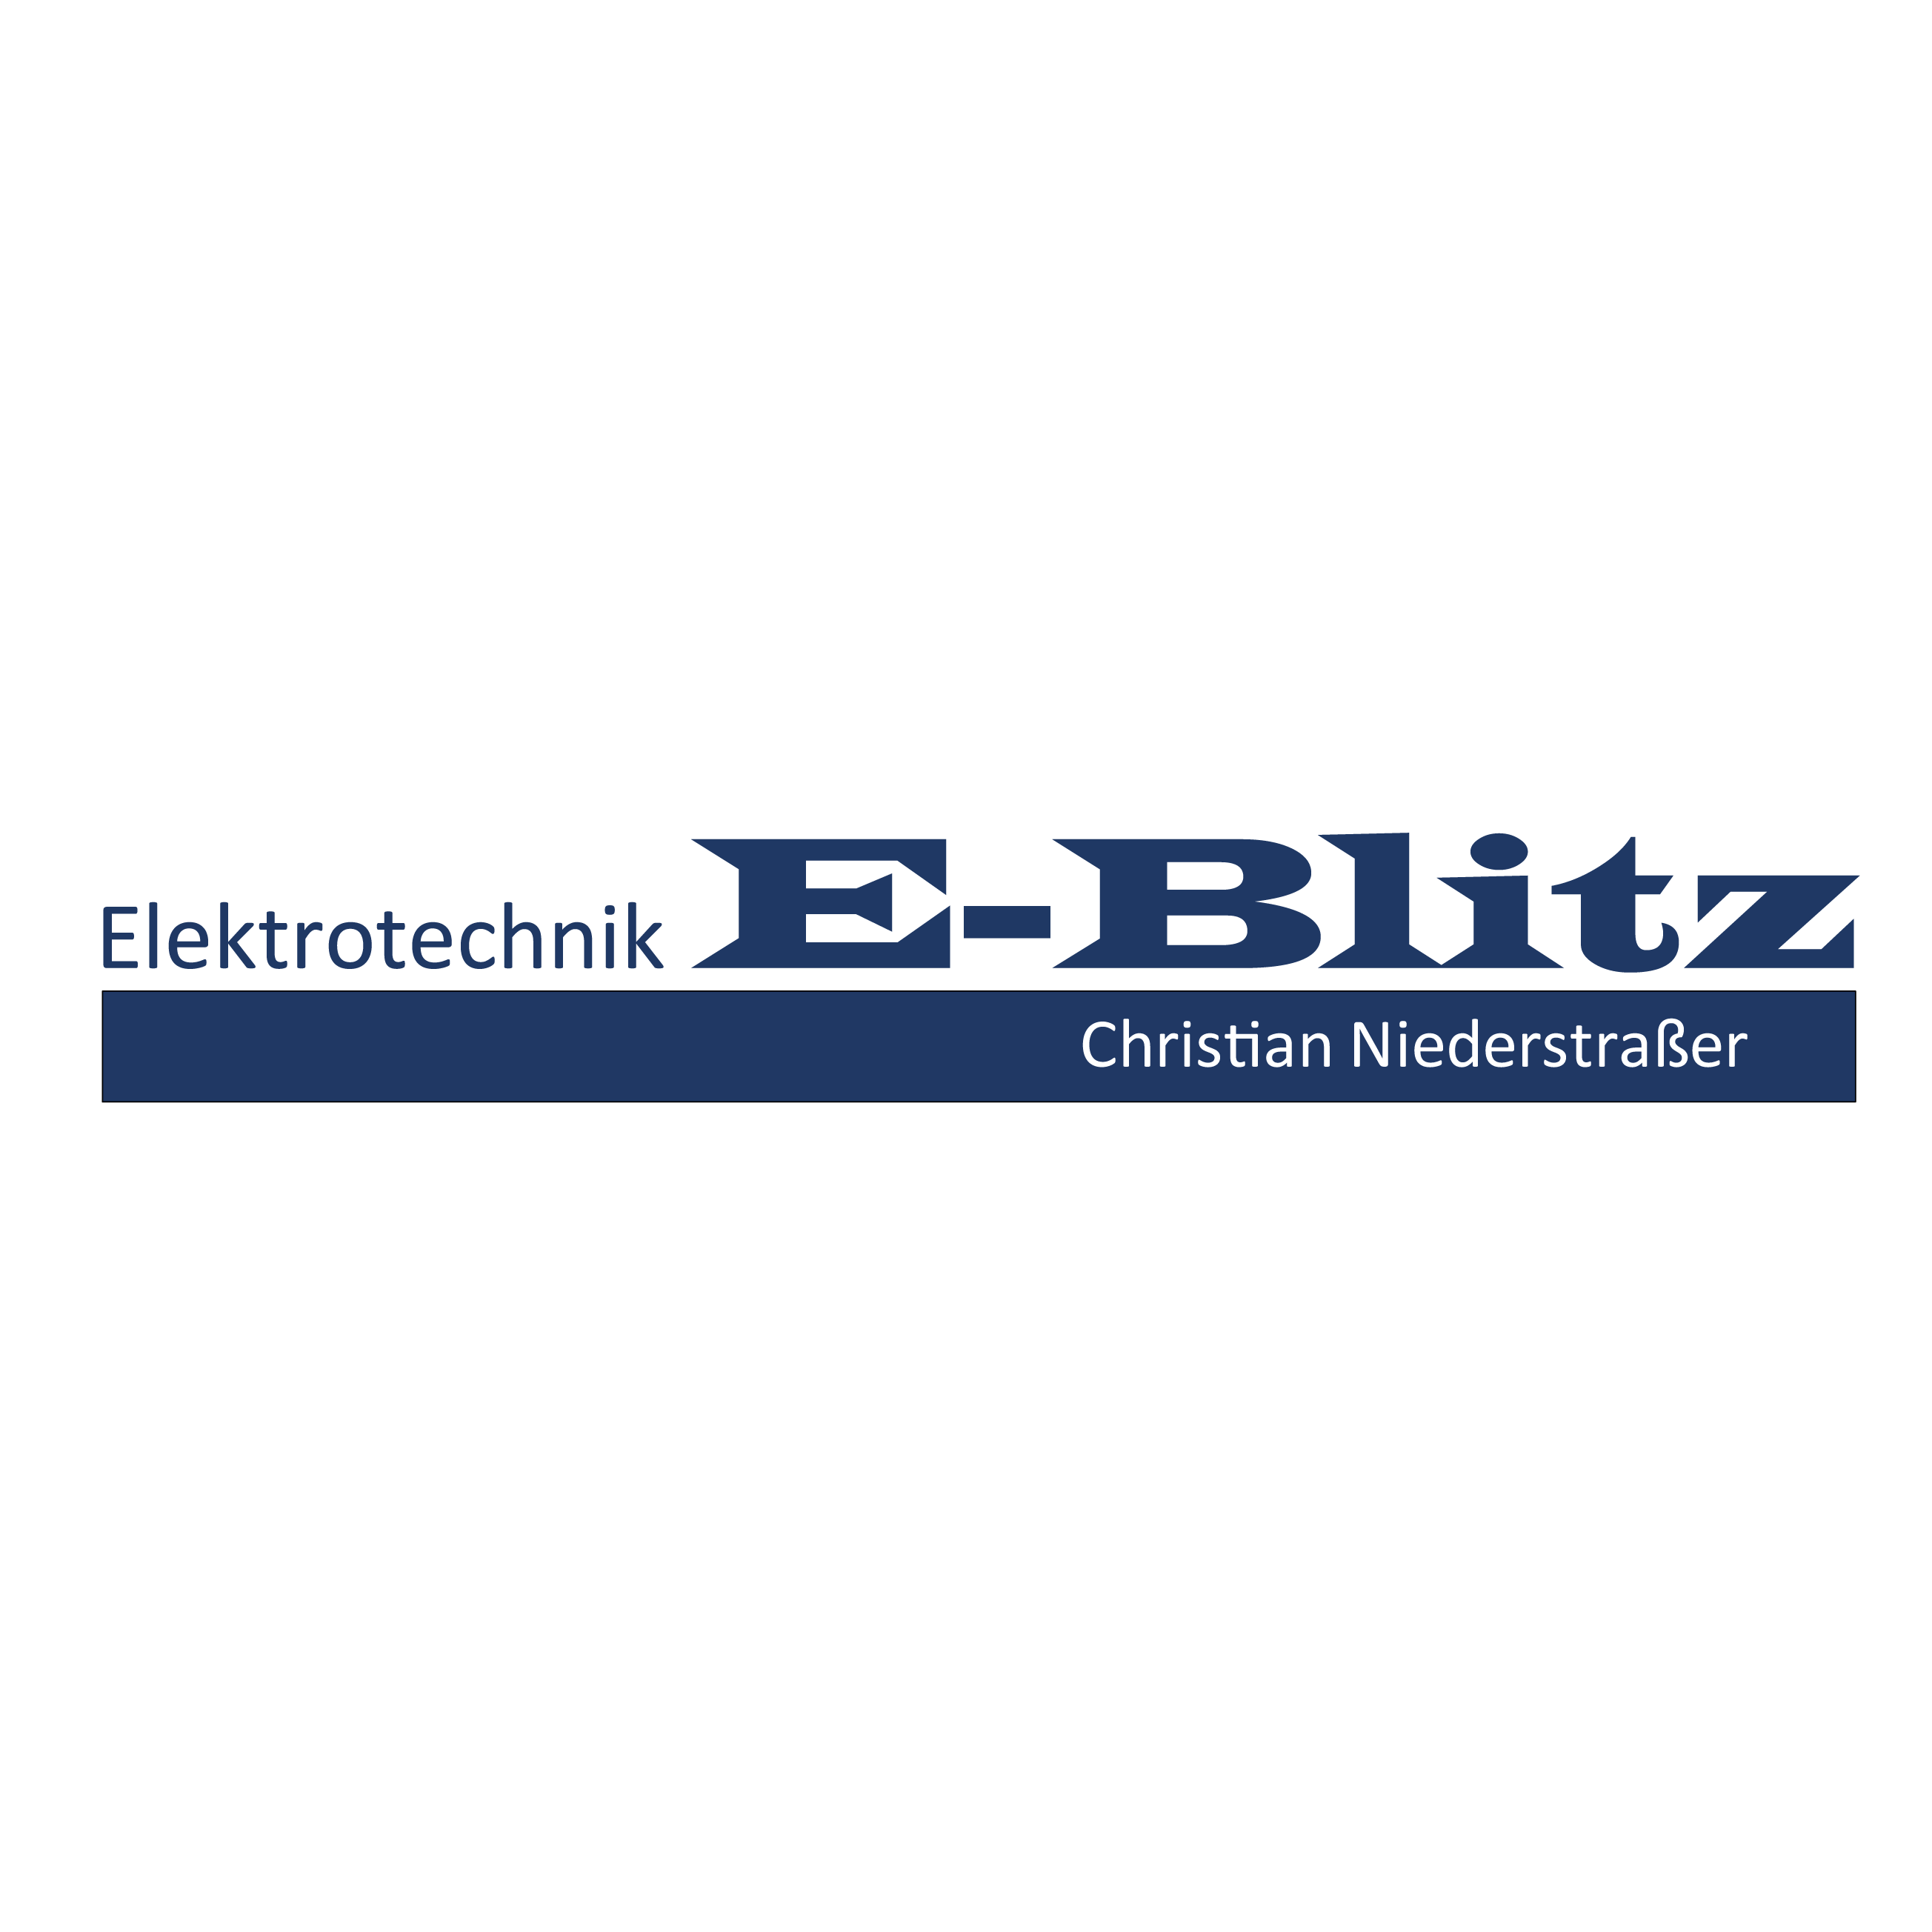 Logo der Firma Elektrotechnik E-Blitz aus Duisburg